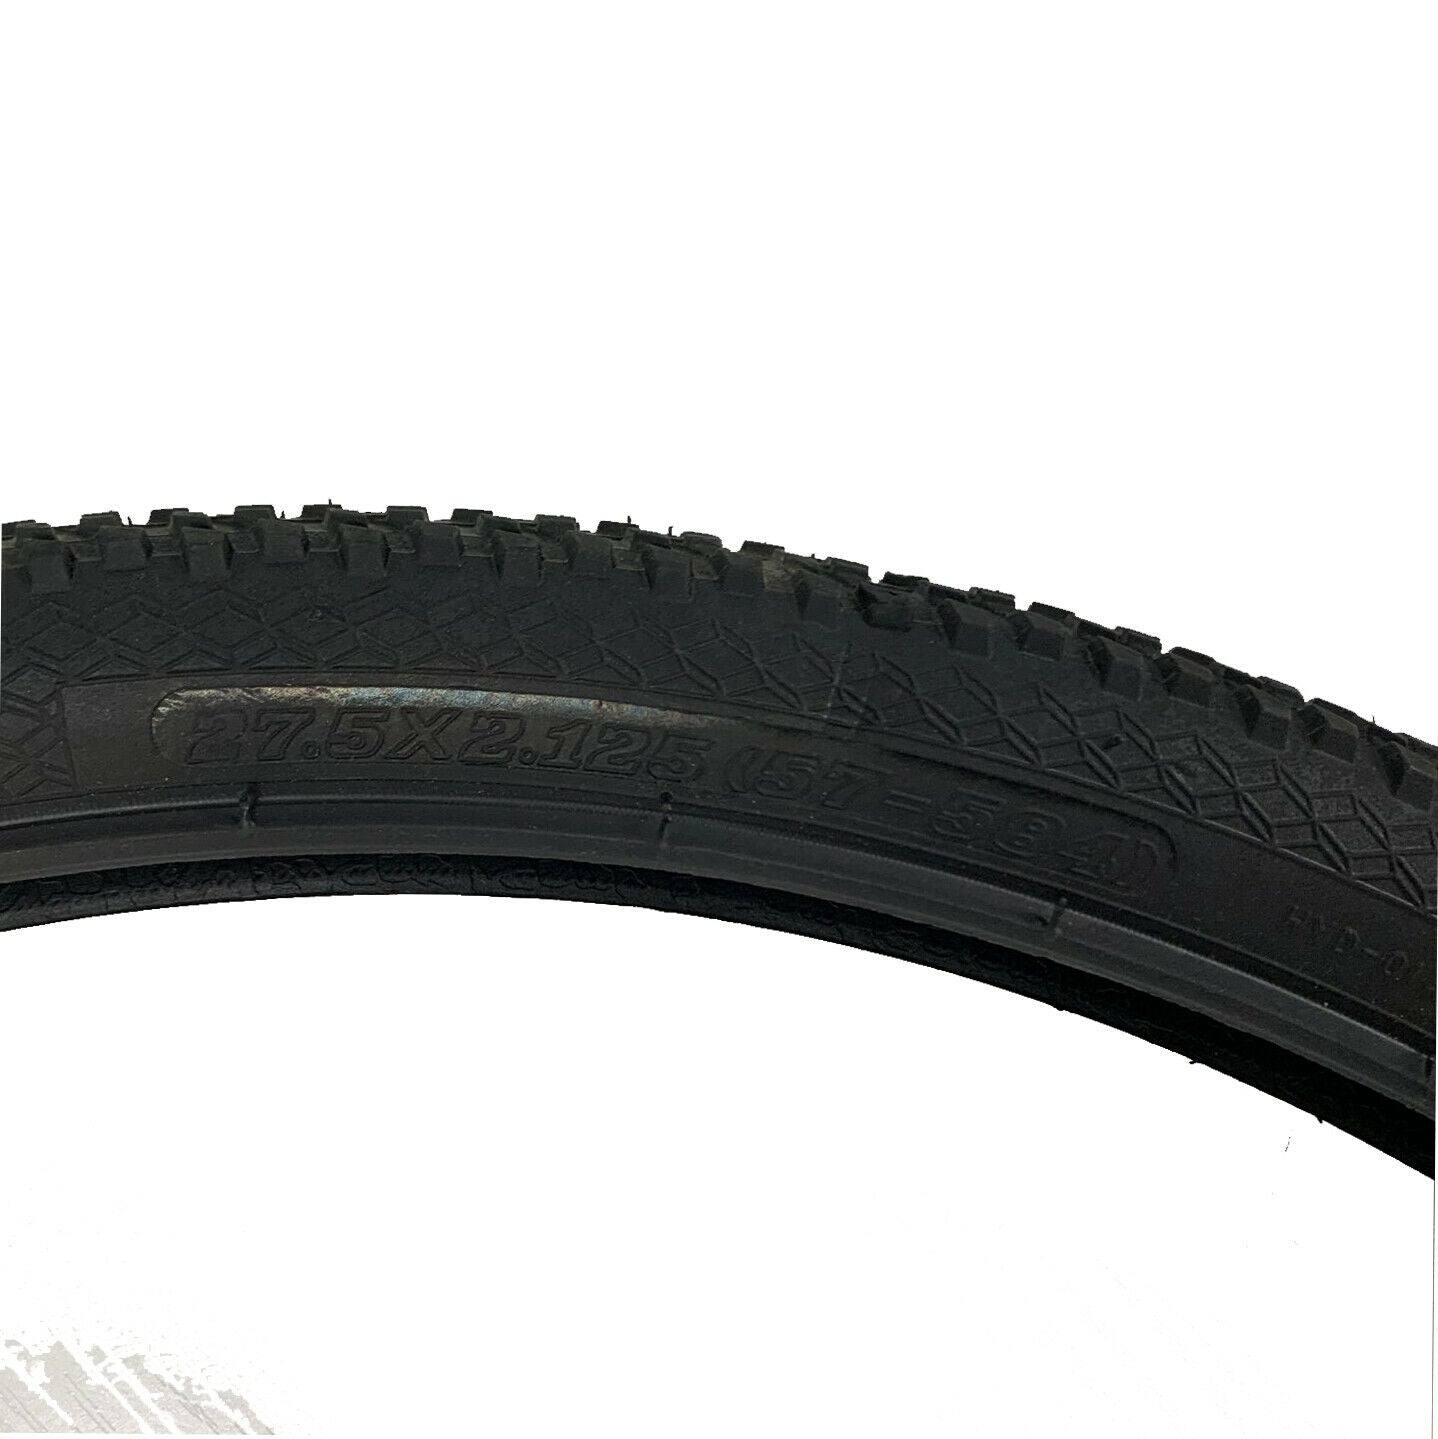 2pcs 27.5" x 2.125 Tyres & Tubes For Bicycle Mountain Bike Electric Bike - TDRMOTO